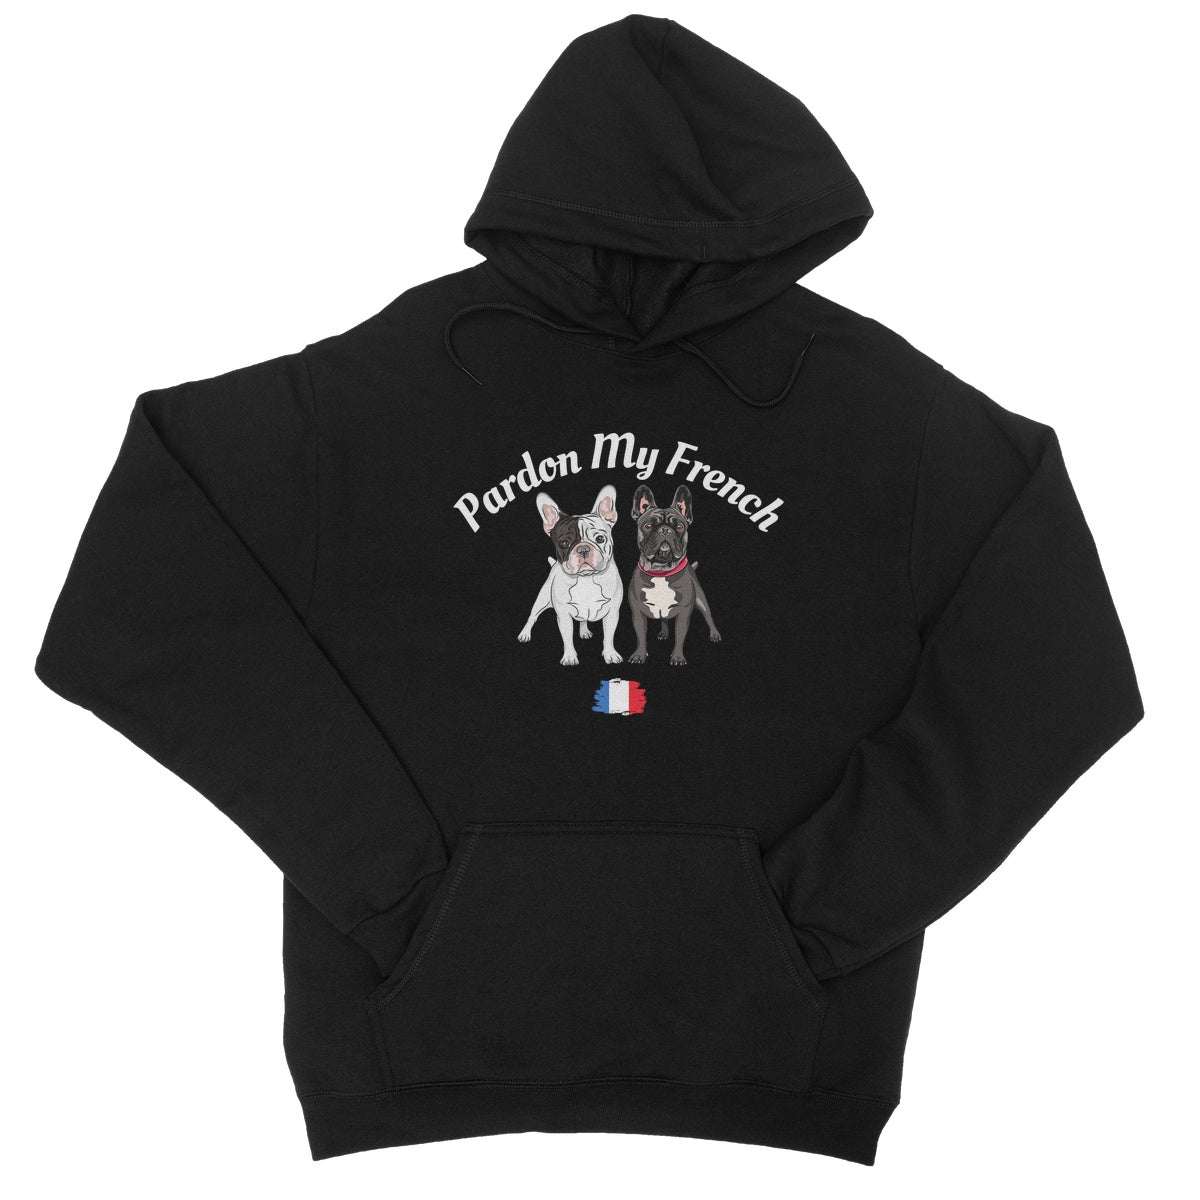 pardon my french hoodie black